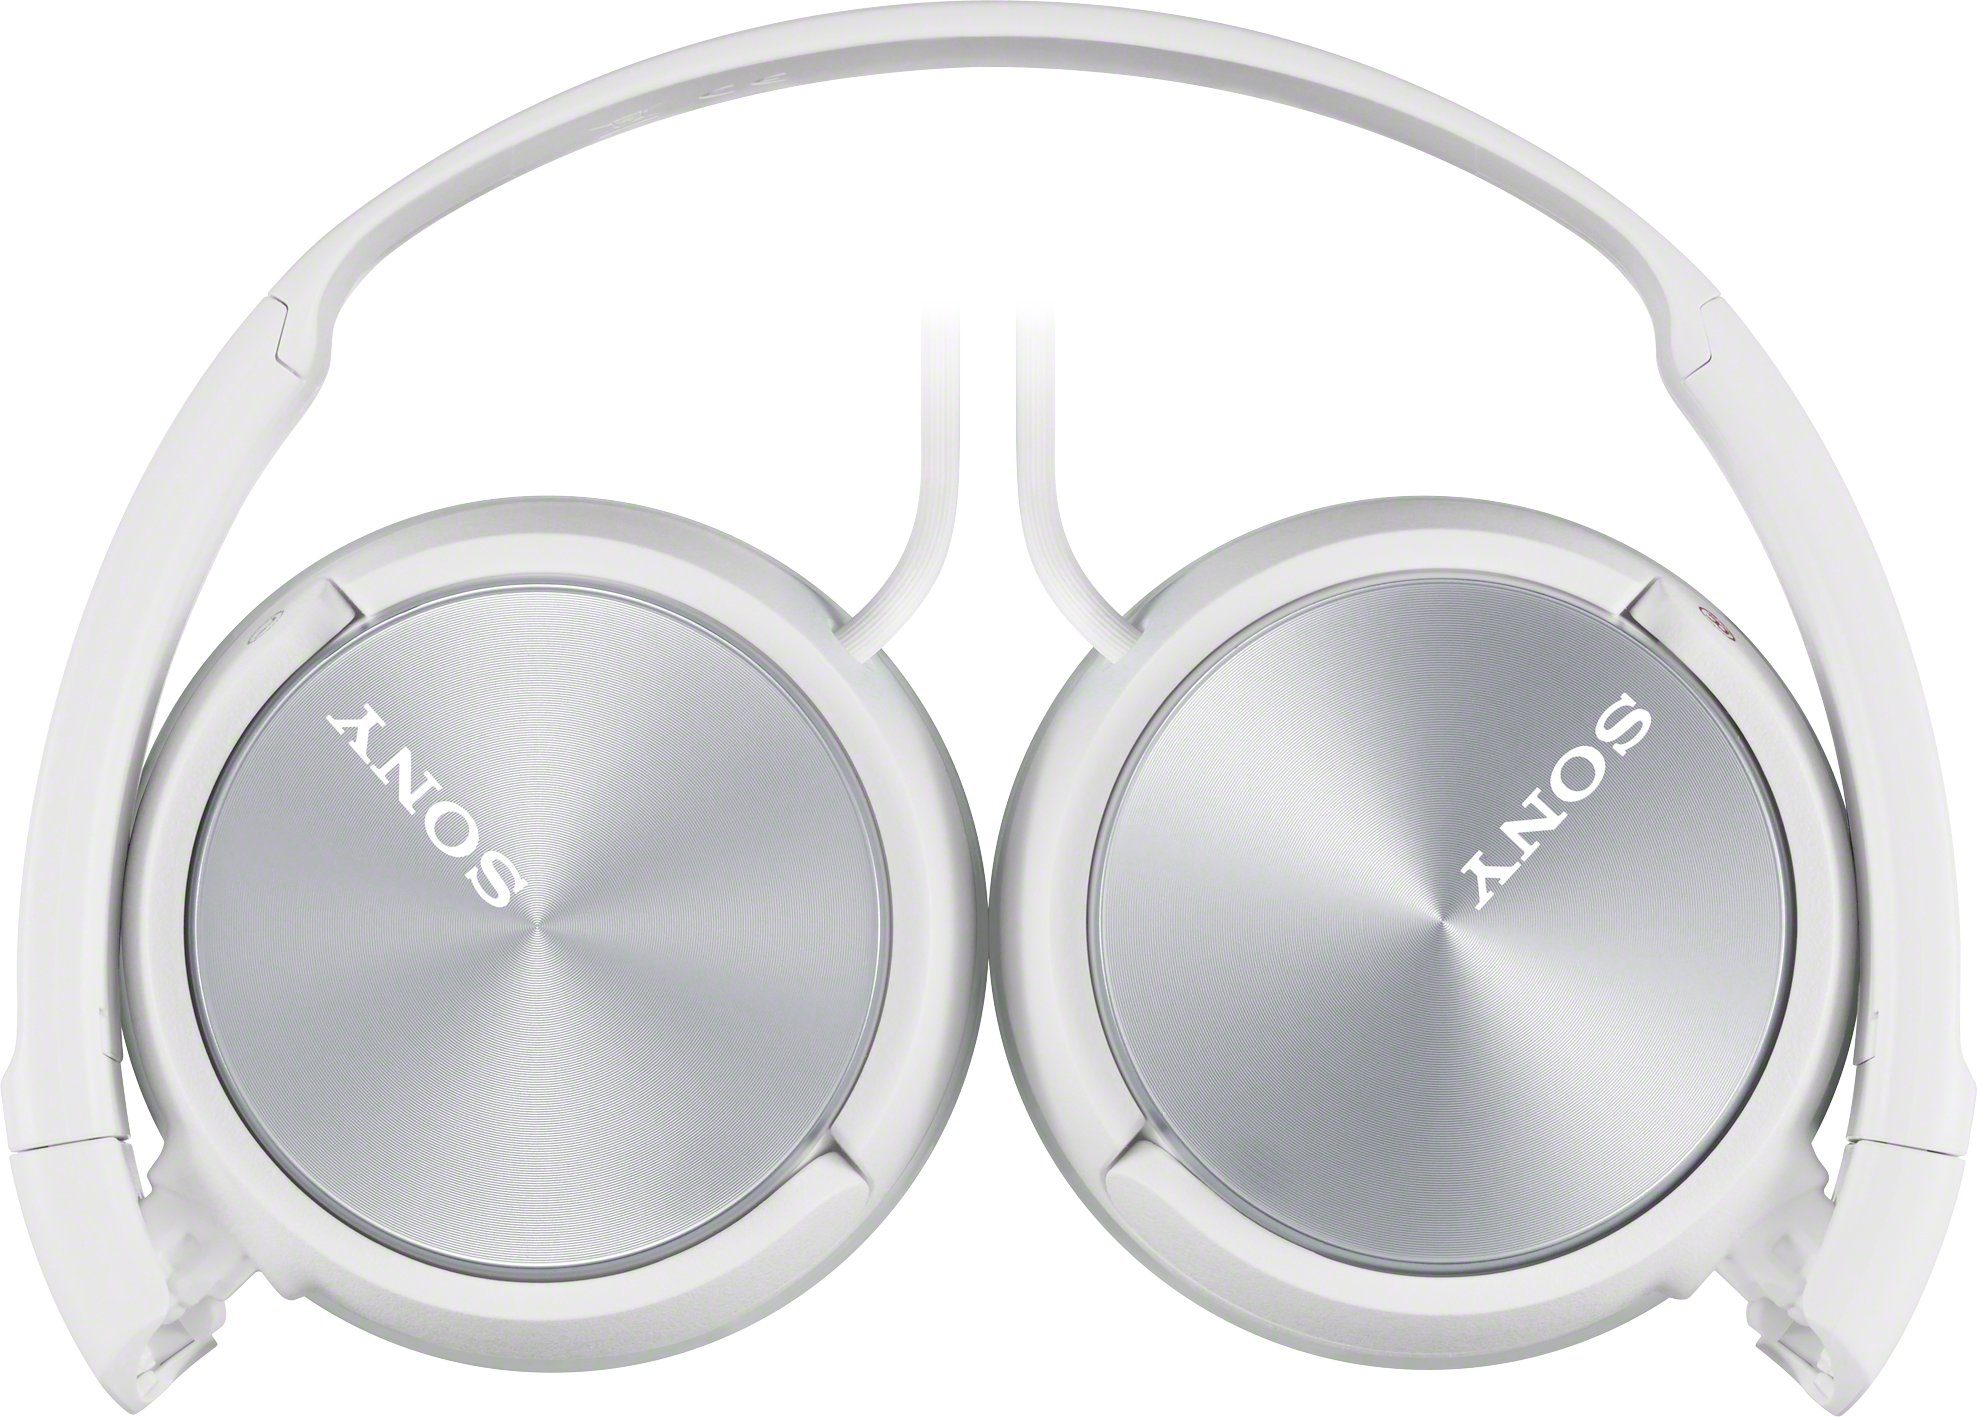 MDR-ZX310 Over-Ear-Kopfhörer Sony weiß